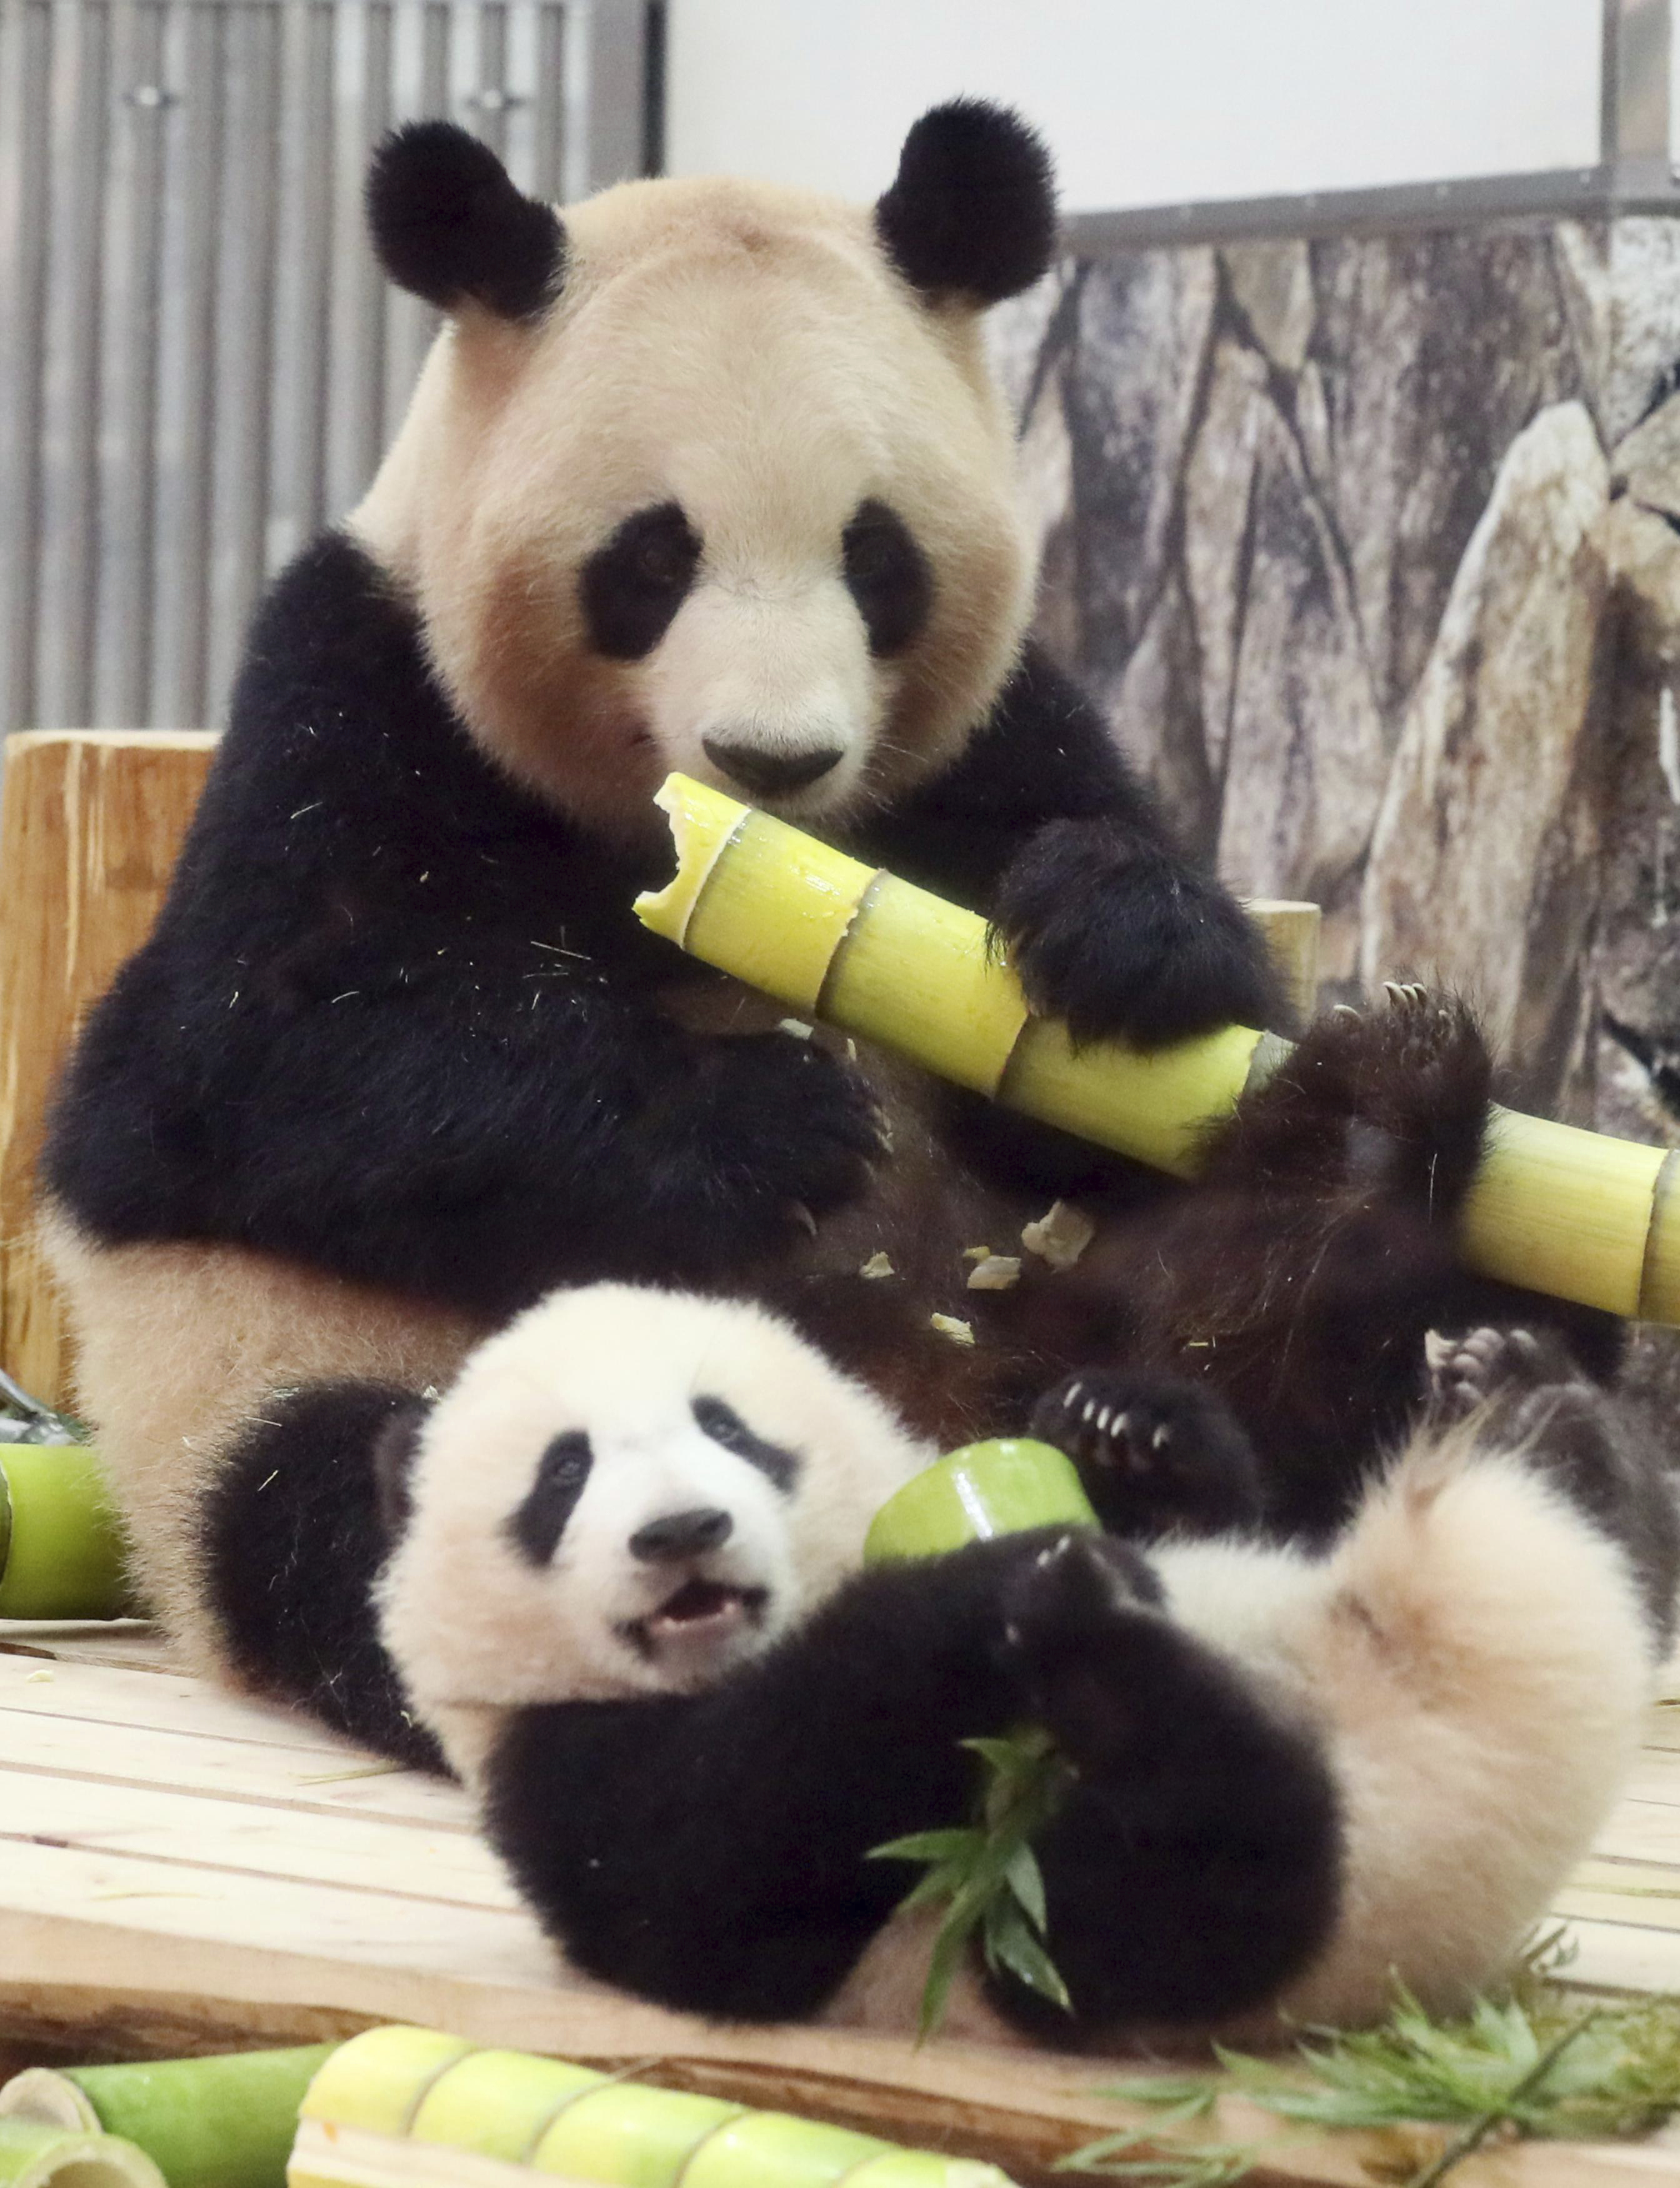 Why are pandas so 'chonky' despite their vegan diet?